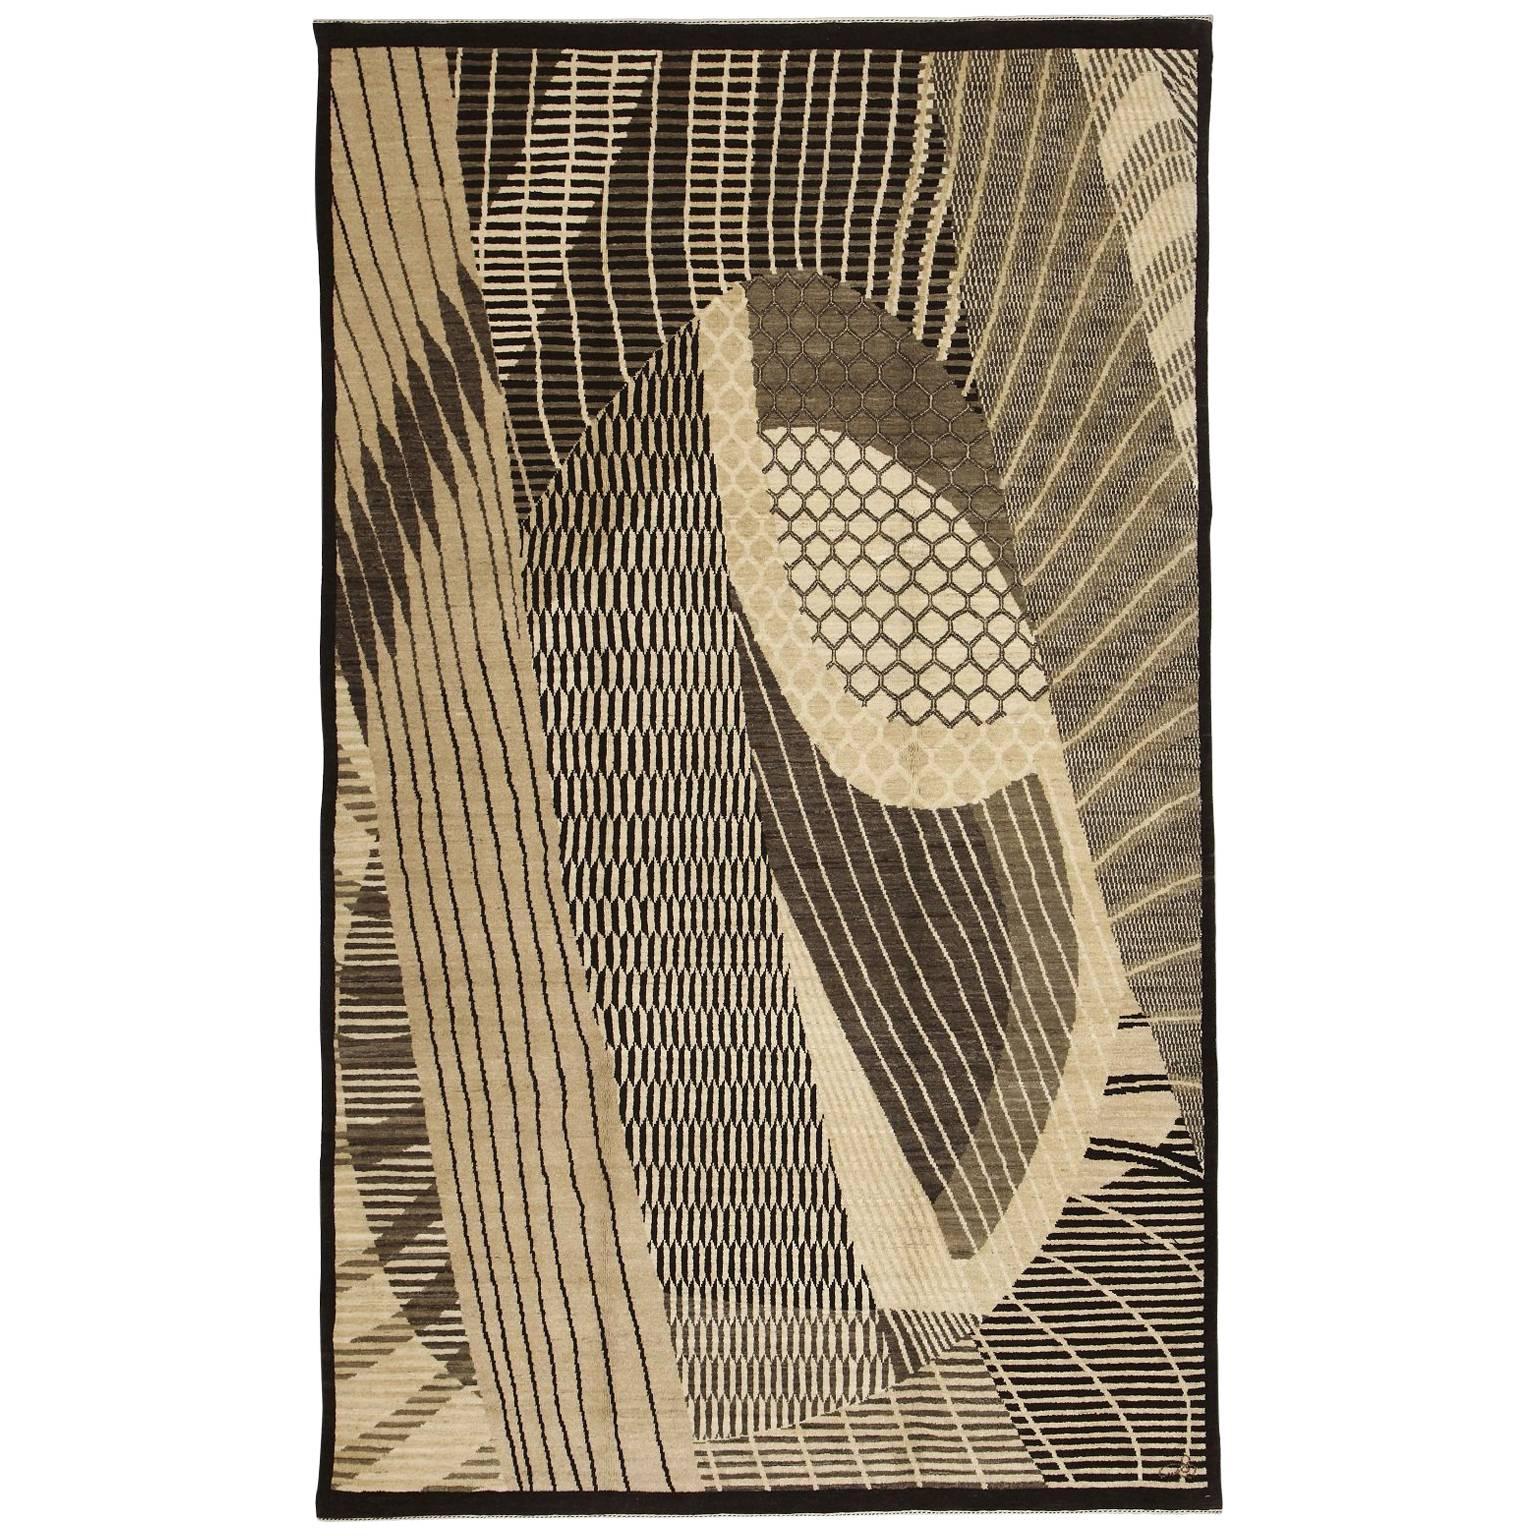 Orley Shabahang "Harmony" Contemporary Persian Rug, Neutral, 6' x 9'